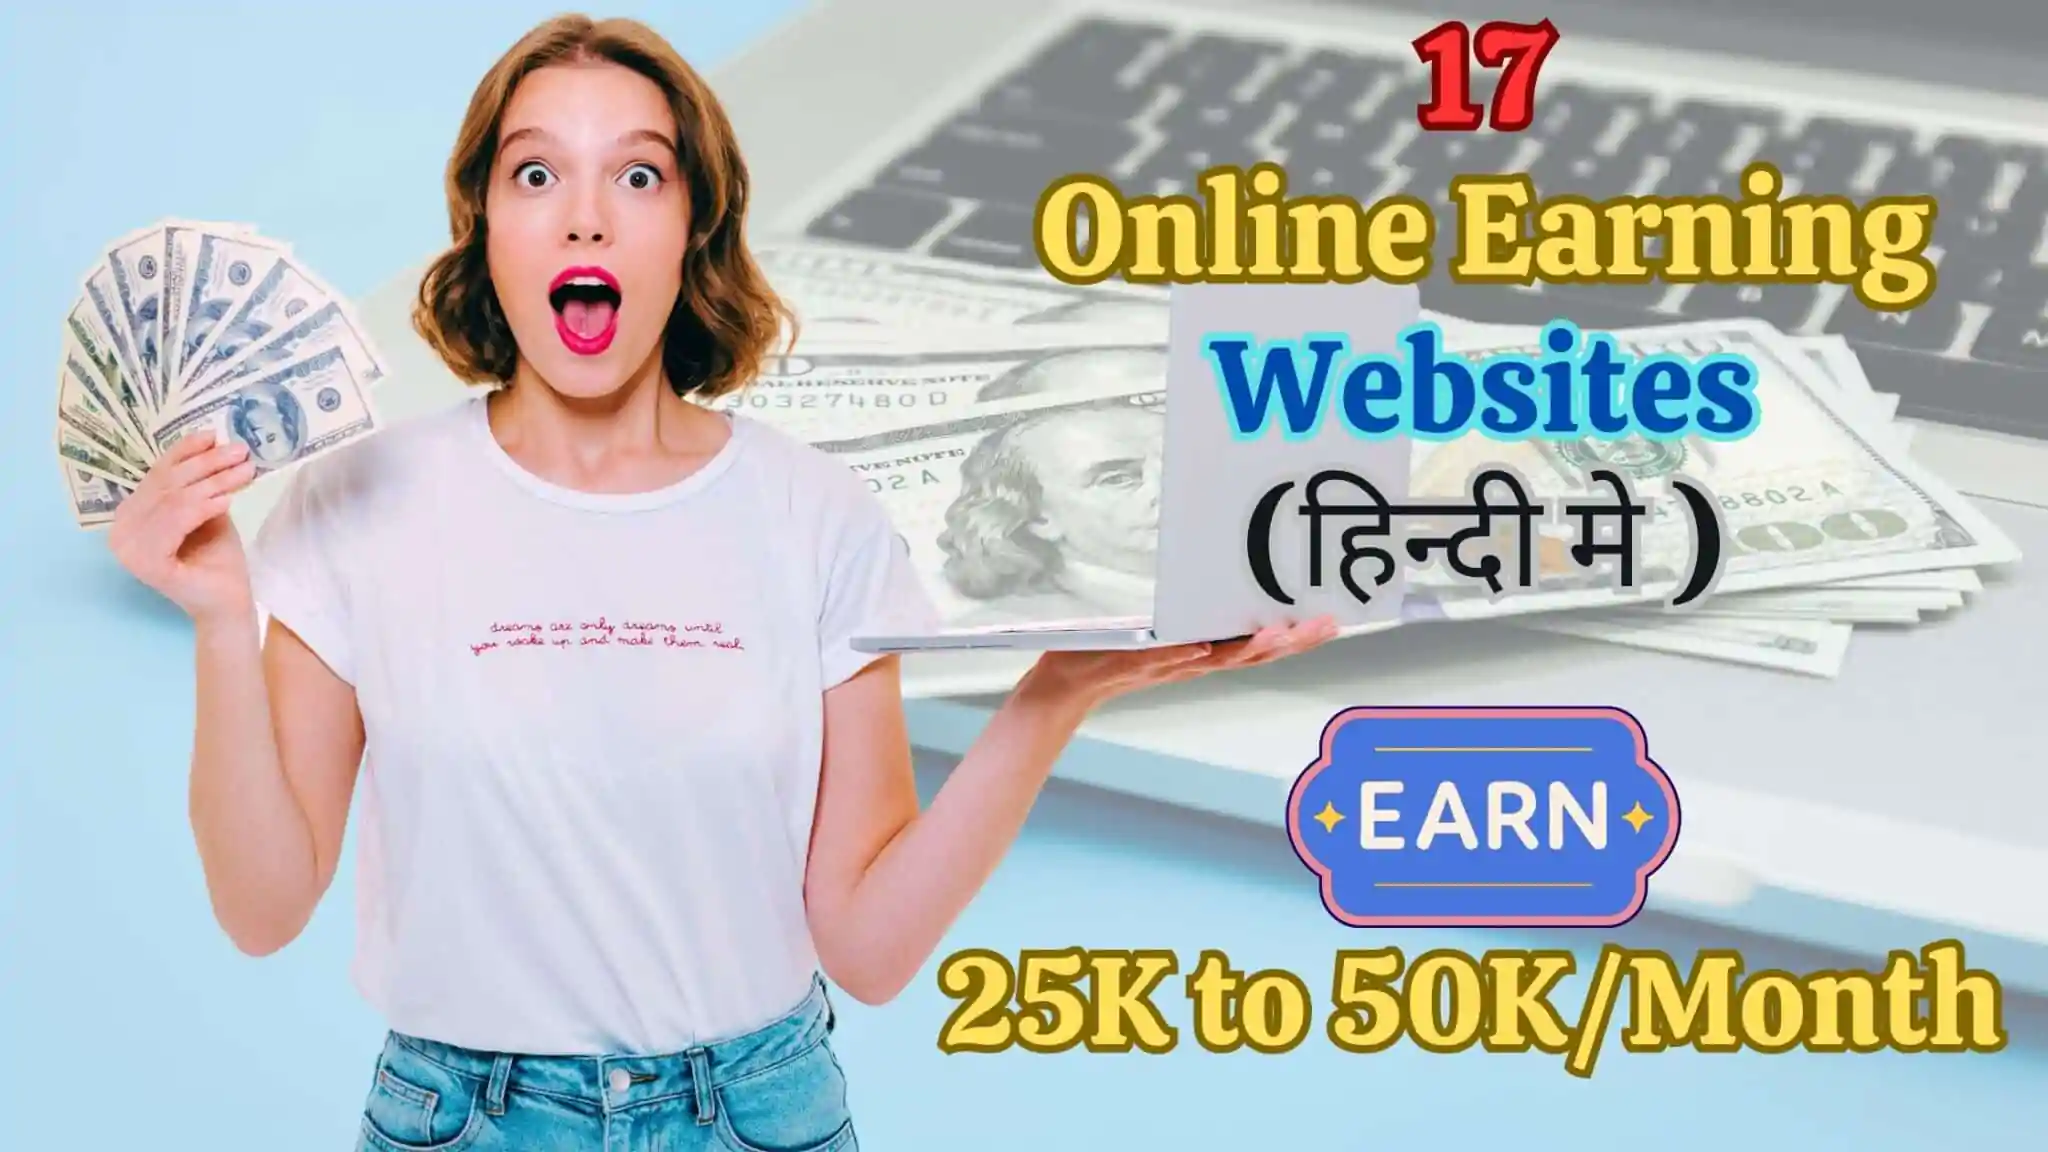 Online Earning Websites In India